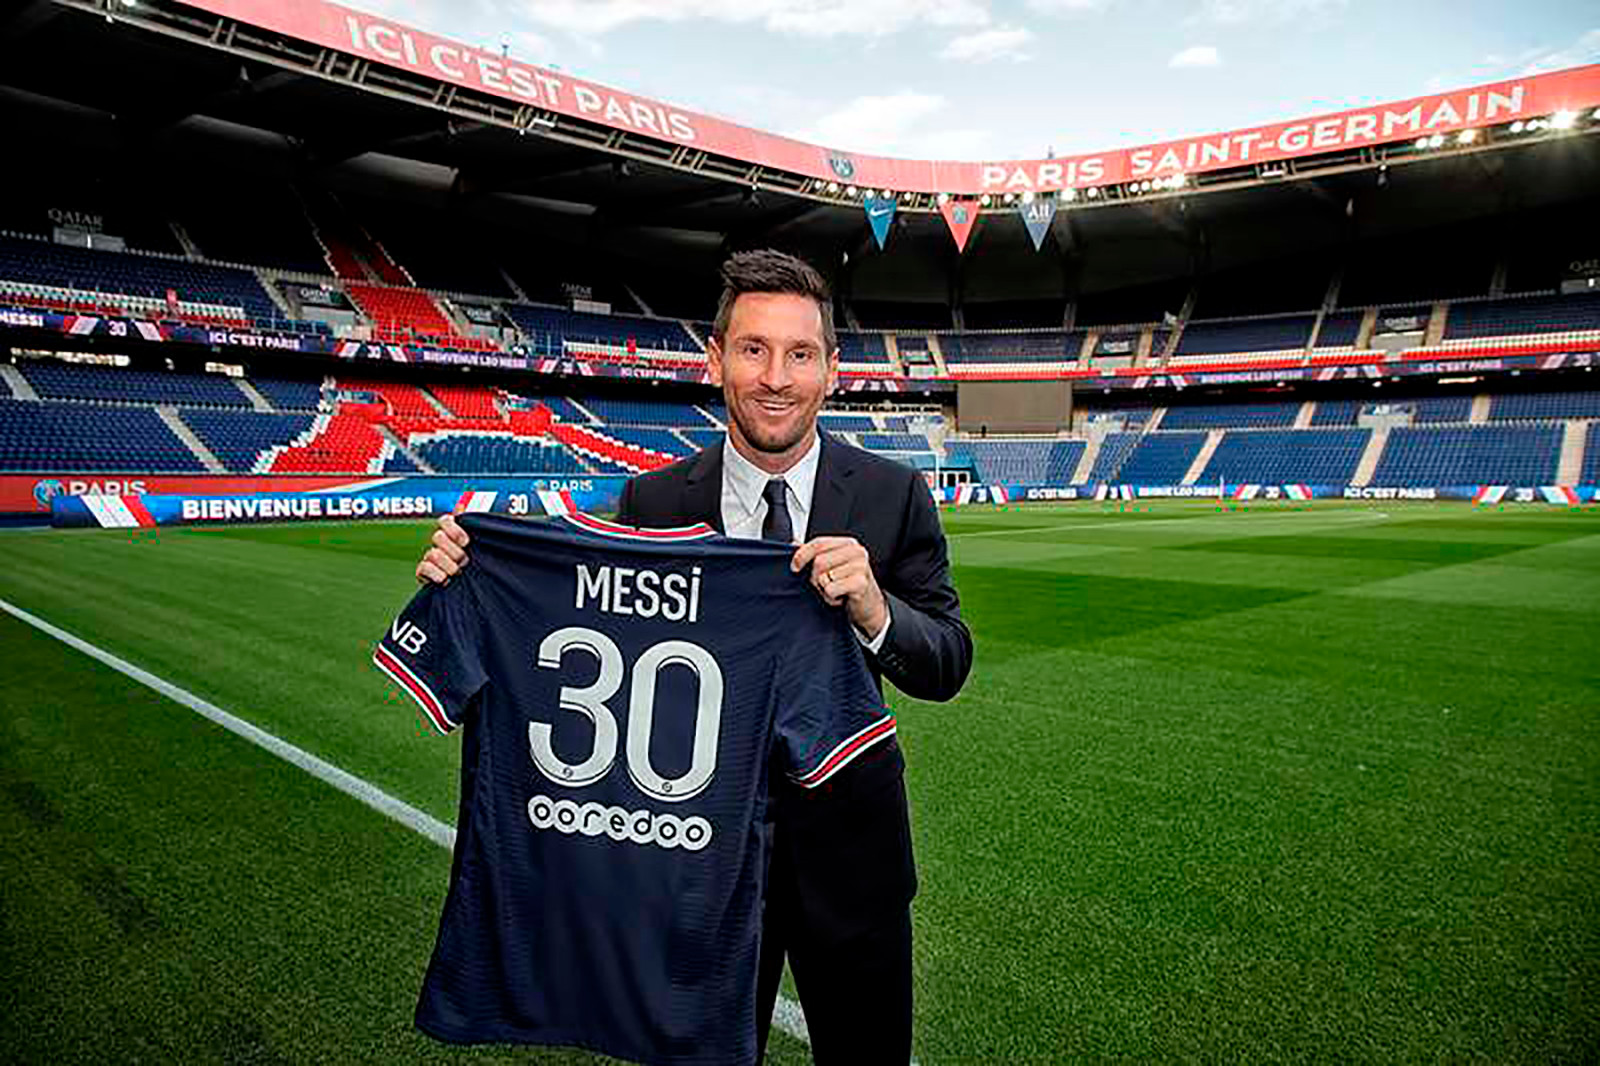 Lionel Messi khoác áo số 30 tại PSG